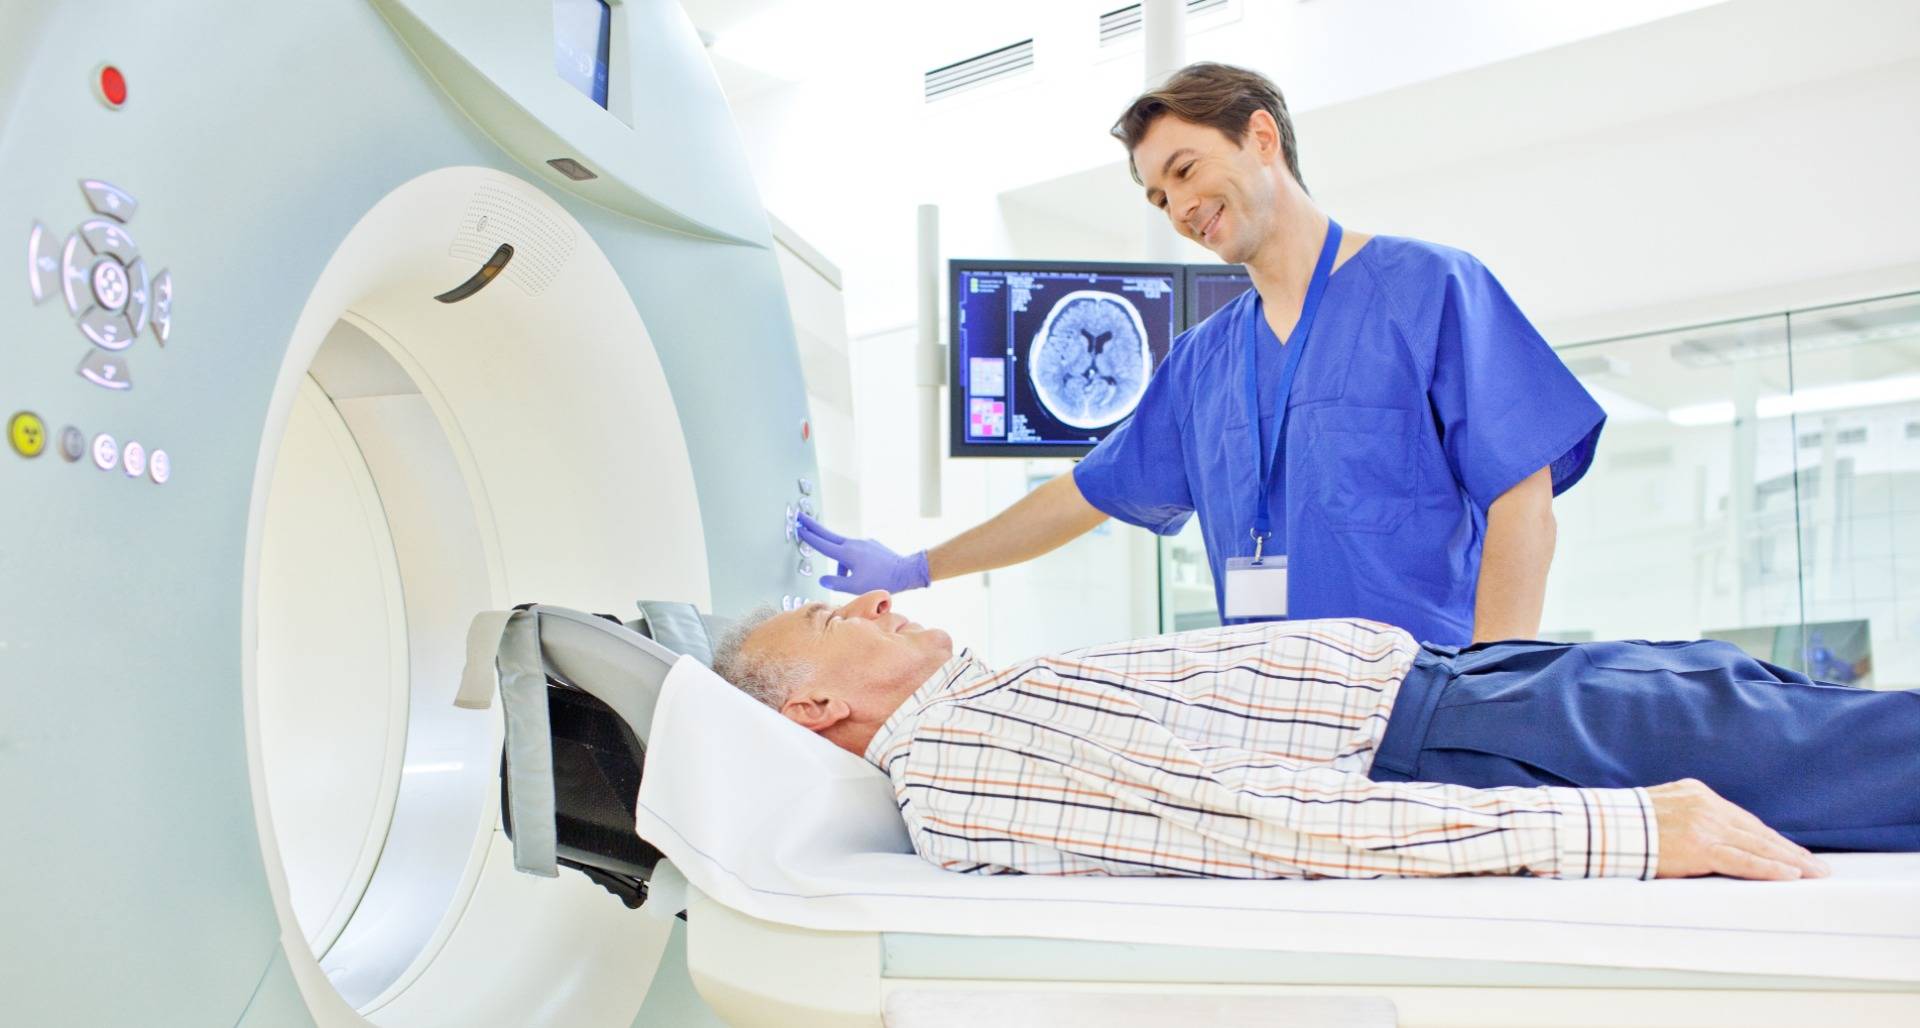 Health-care professional guiding man through medical imaging procedure